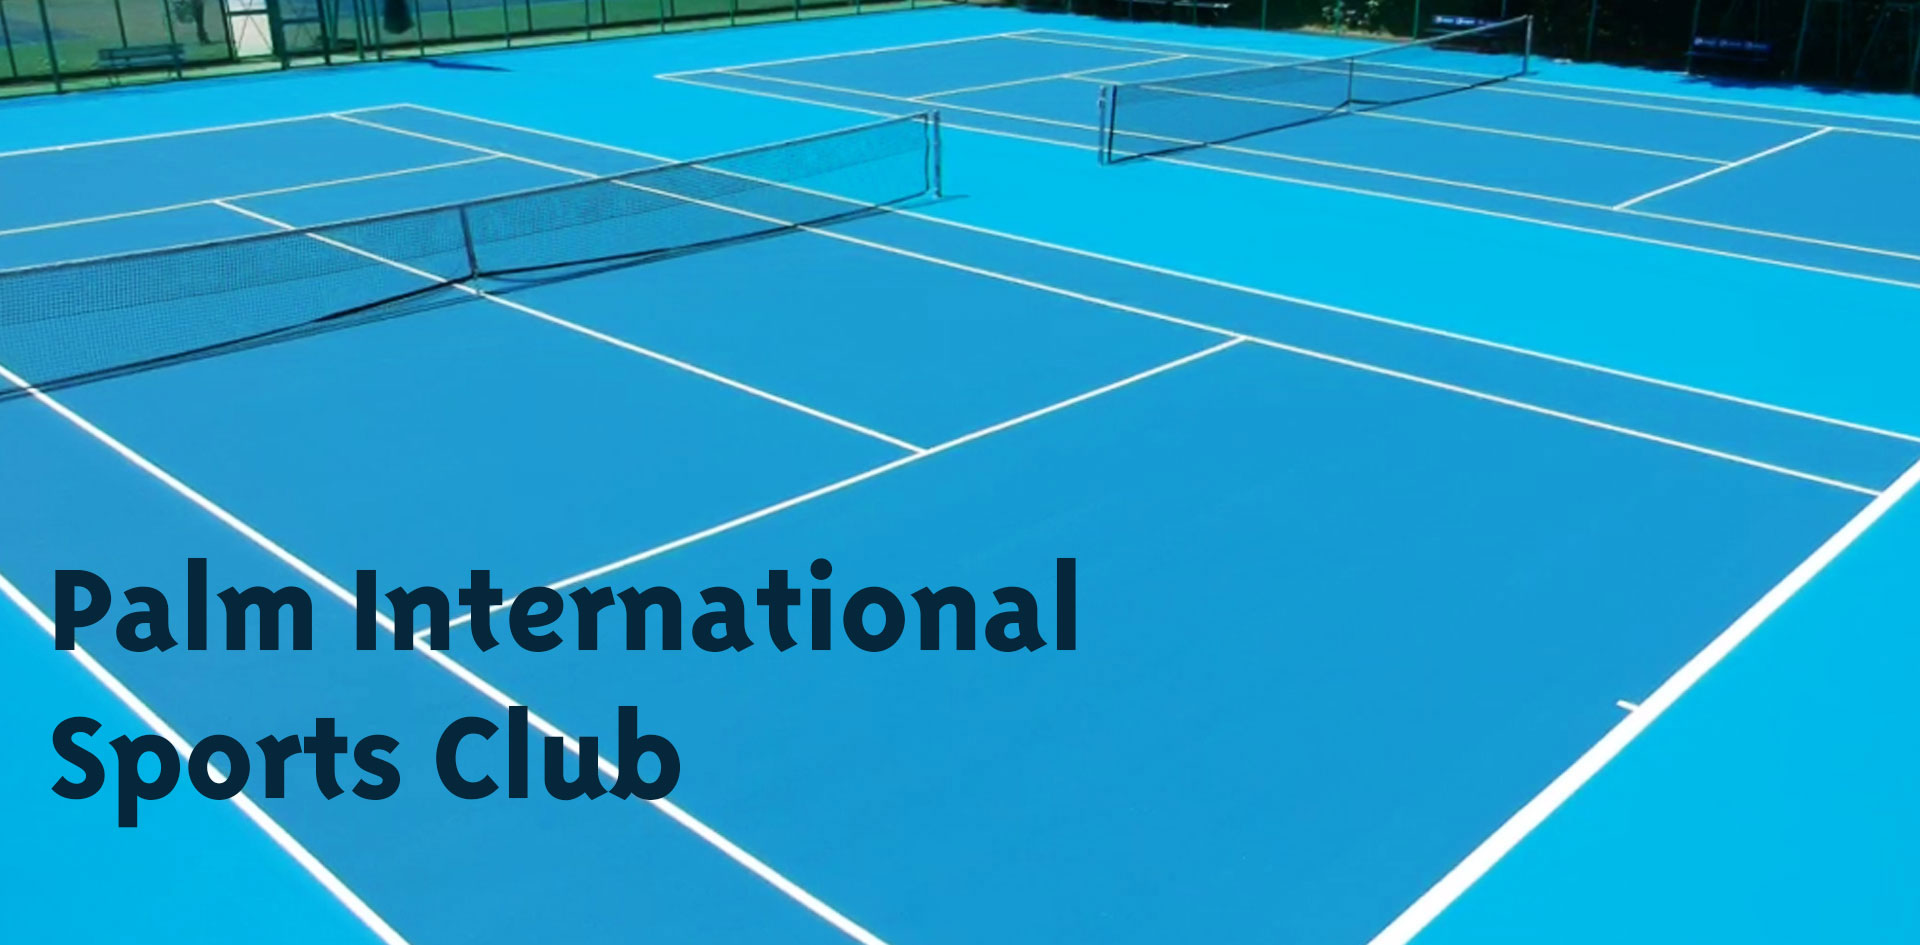 Palm International Sports Club